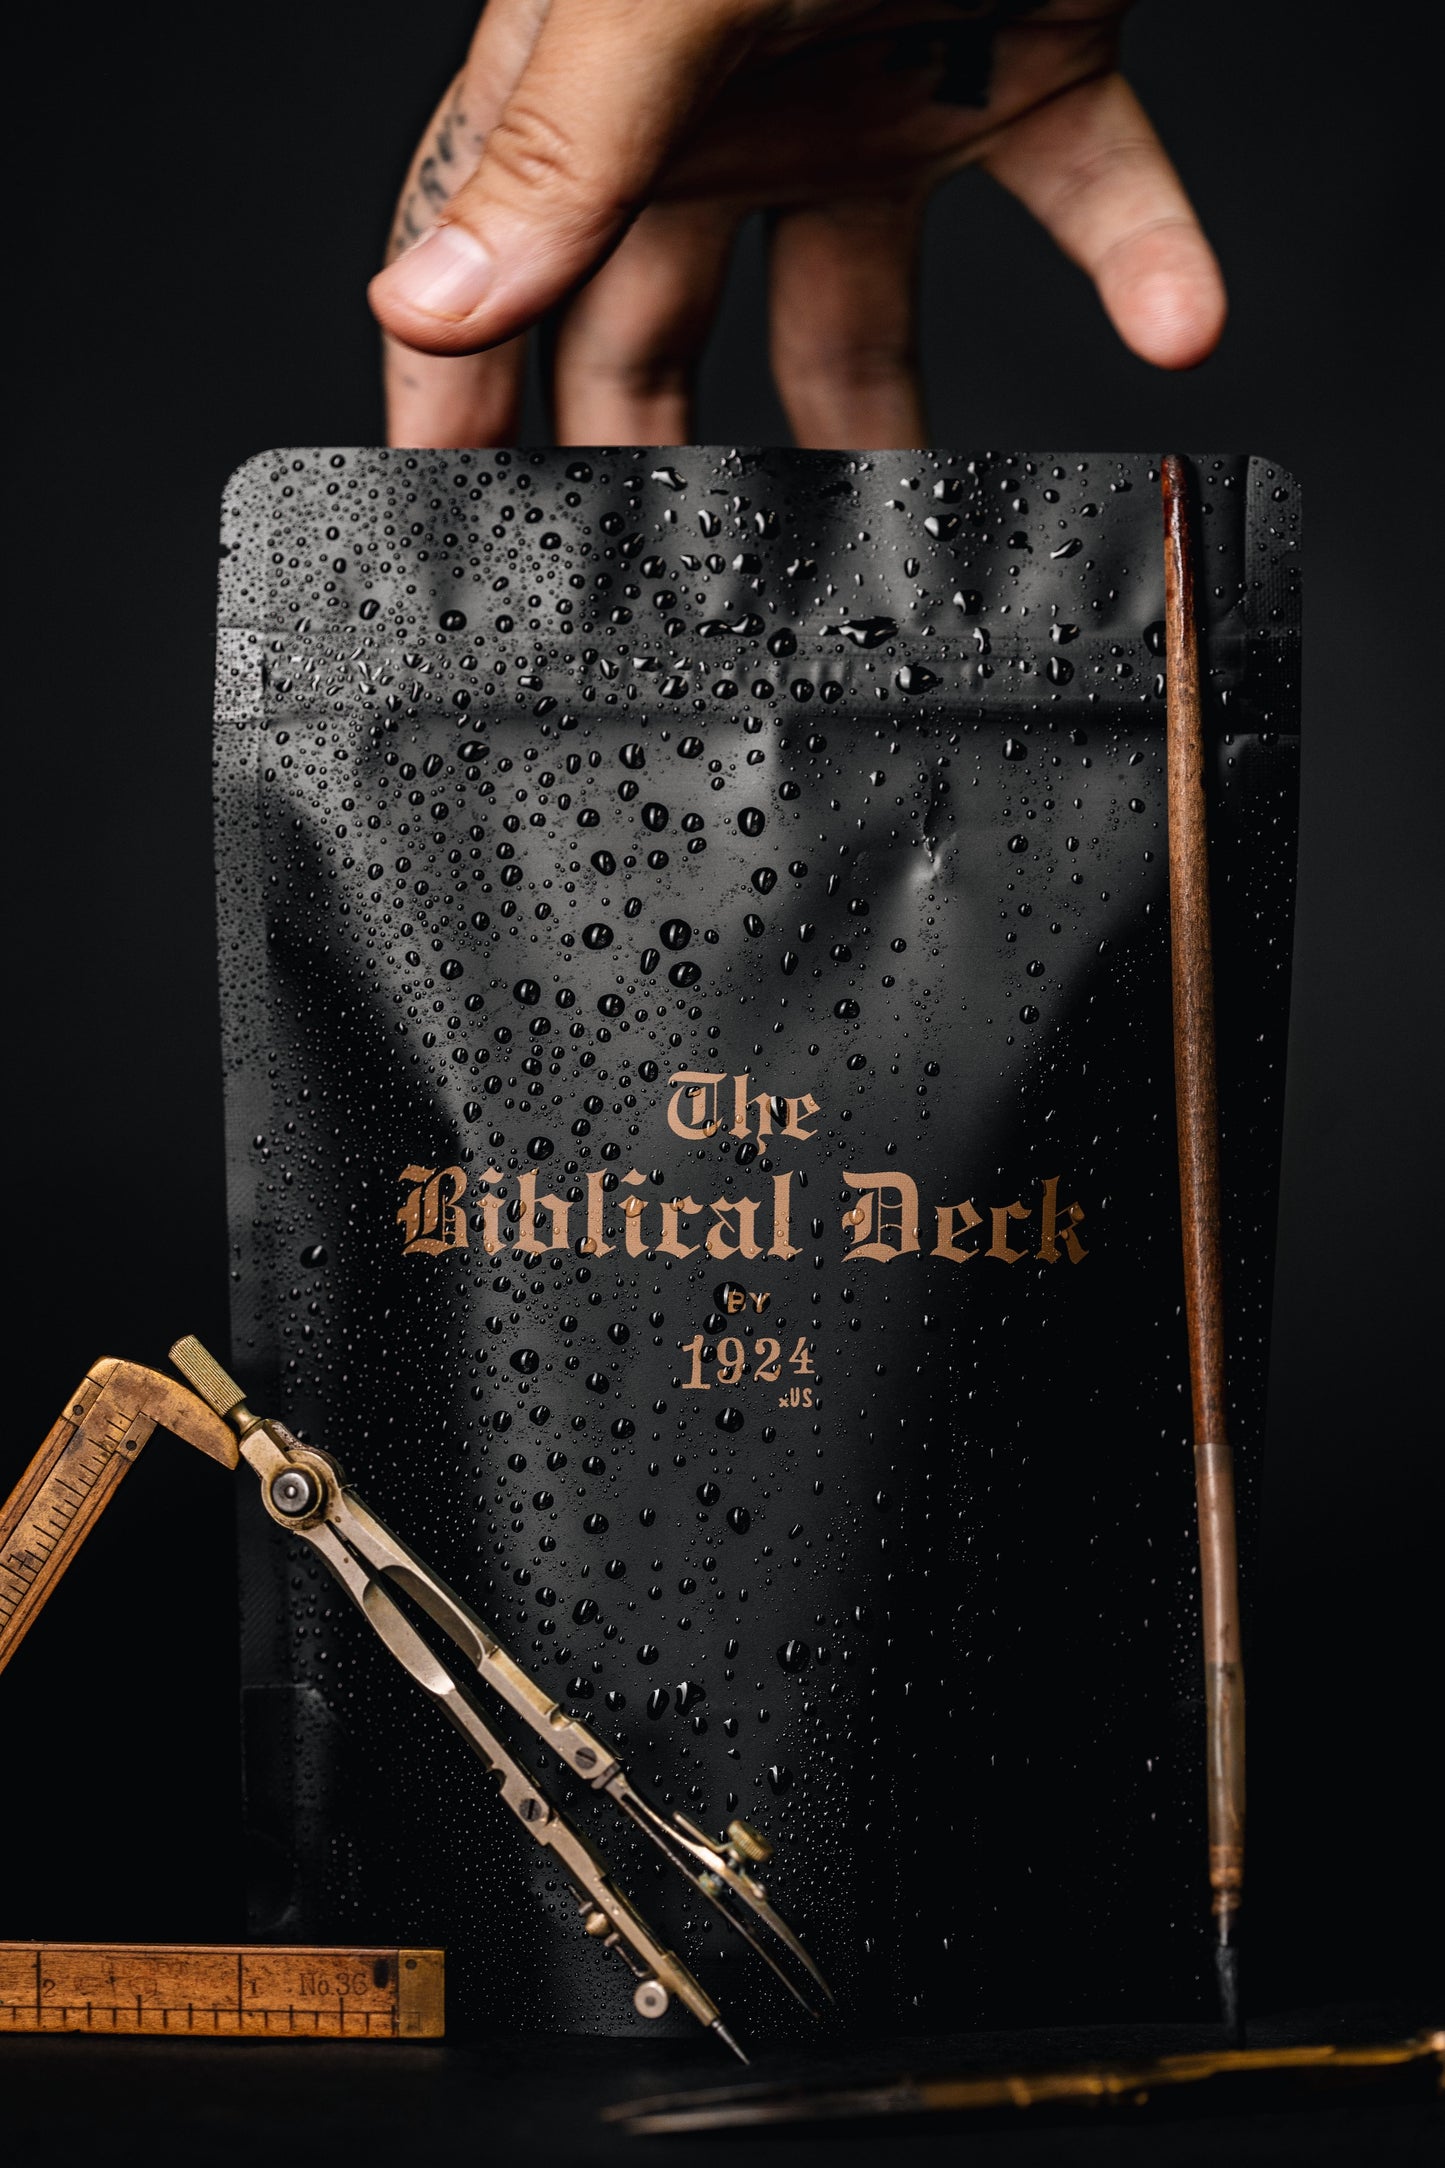 1924us Black Bible Deck